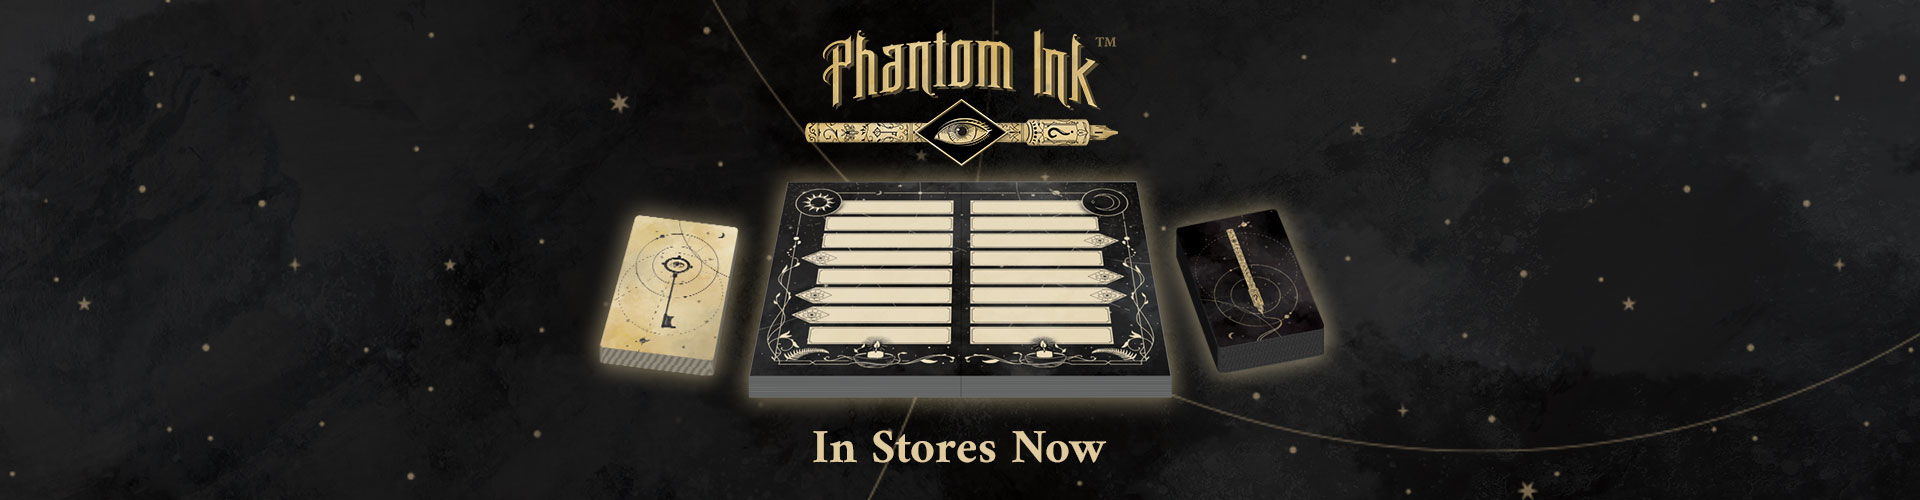 Phantom Ink In Stores Now